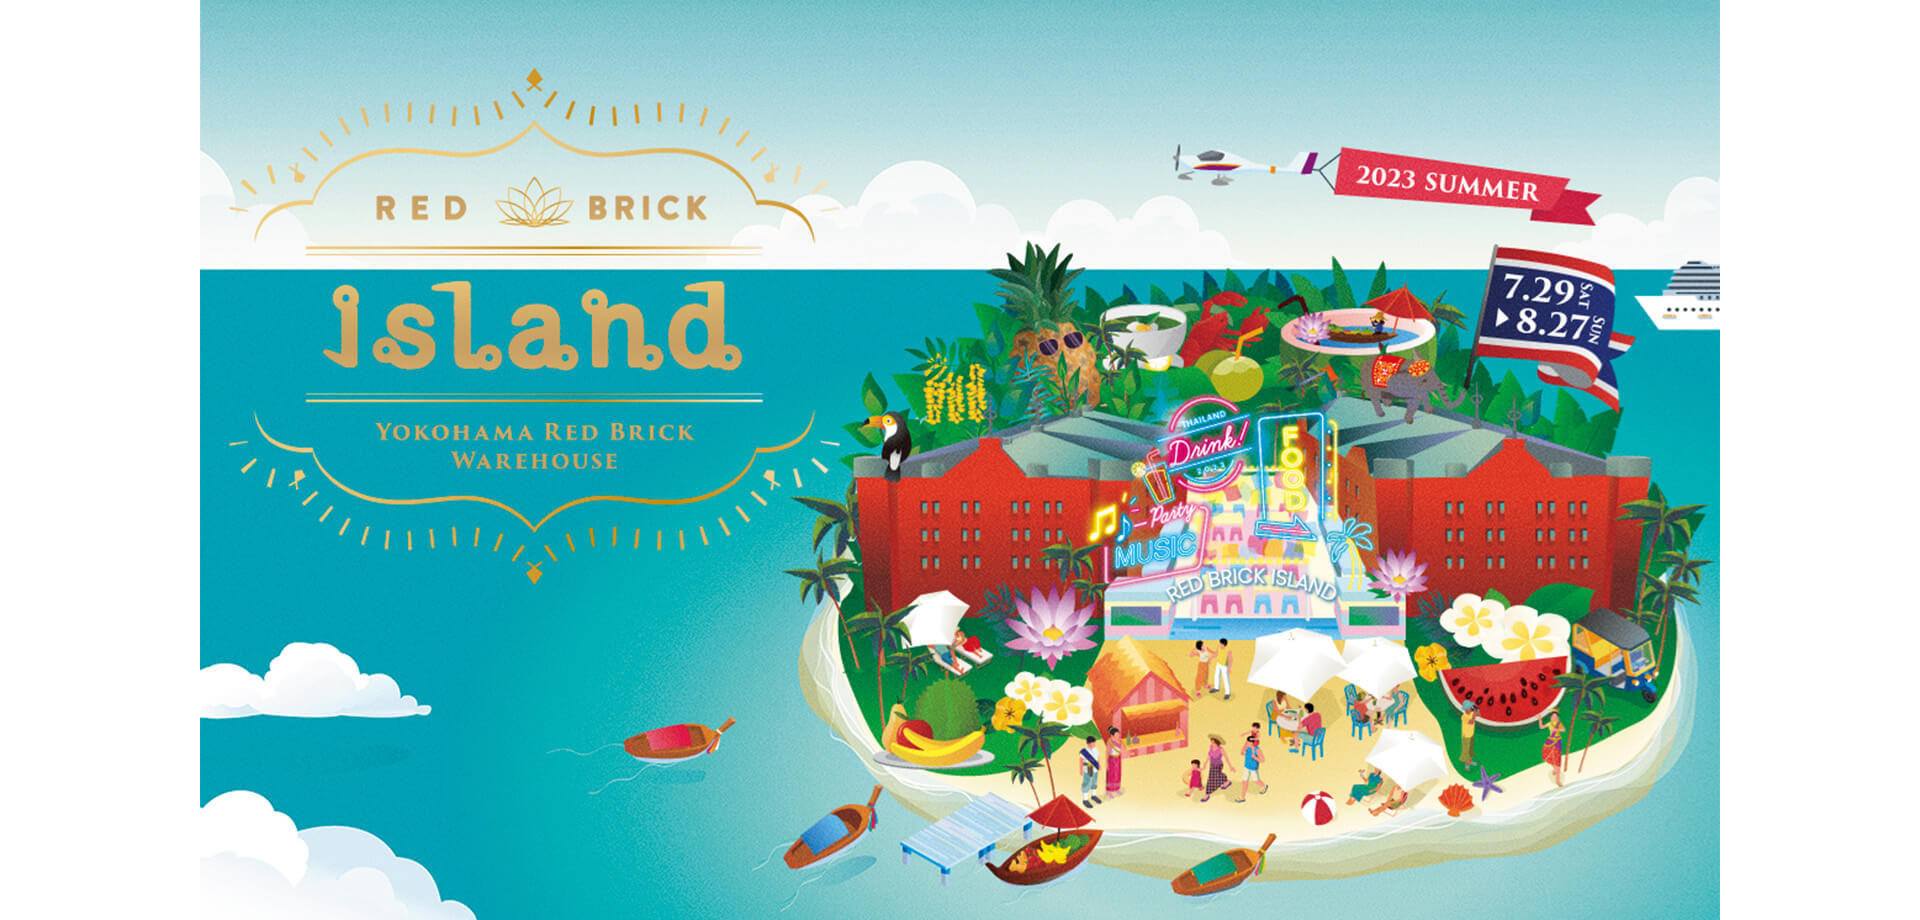 Red Brick Island 2023 横浜赤レンガ倉庫